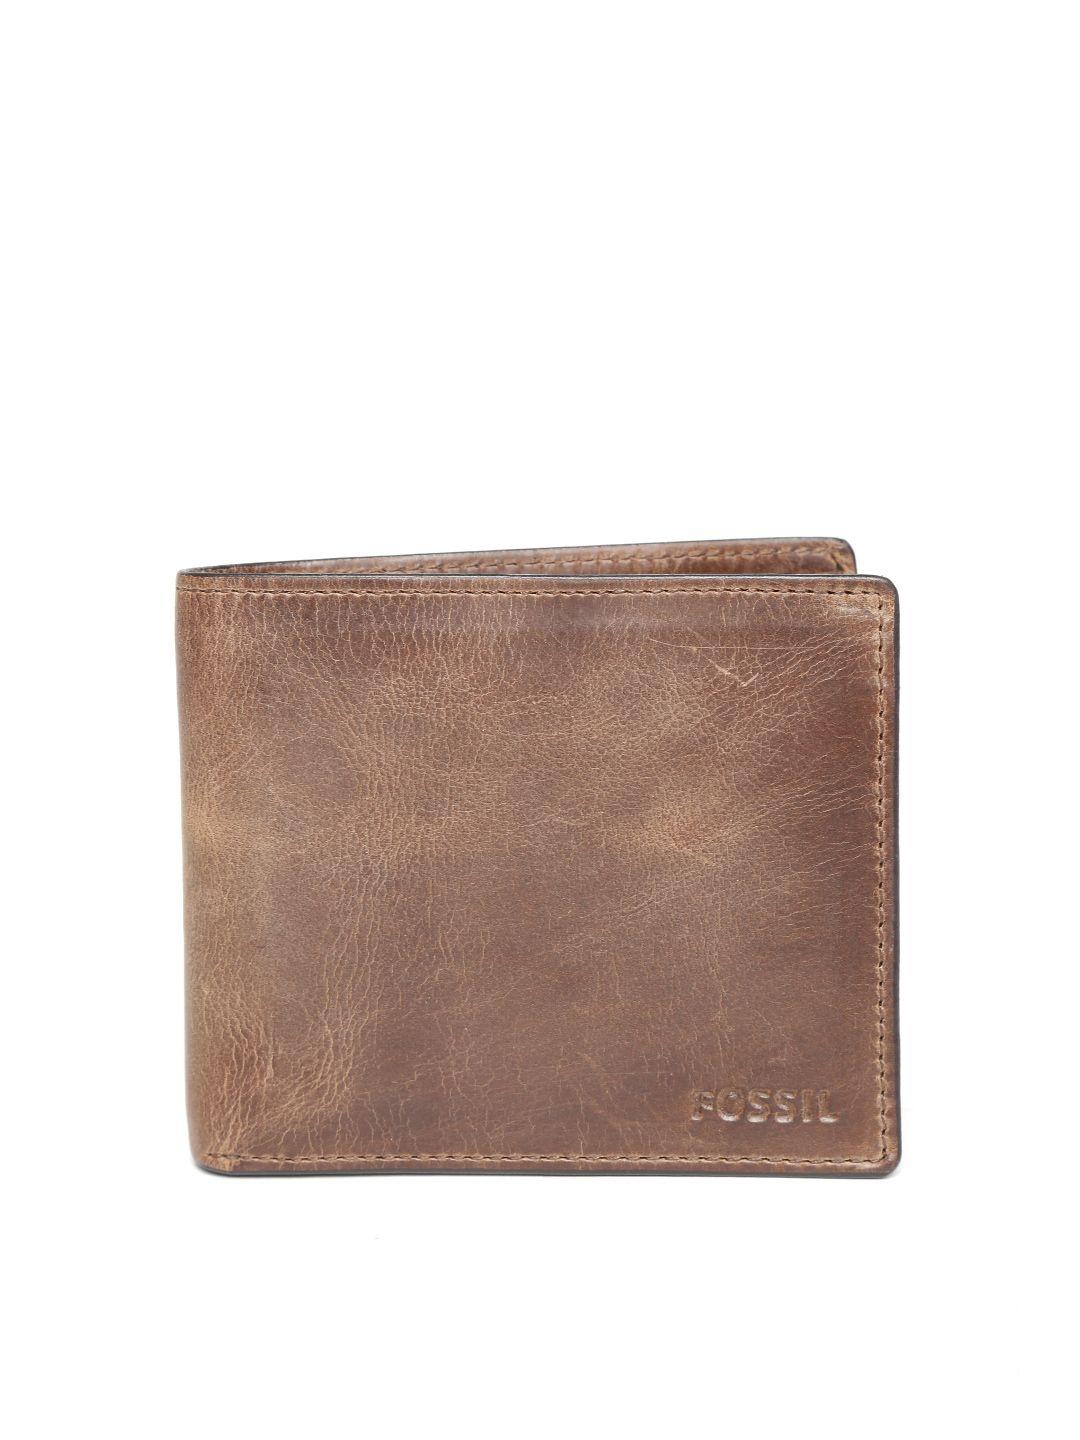 fossil men genuine leather wallet